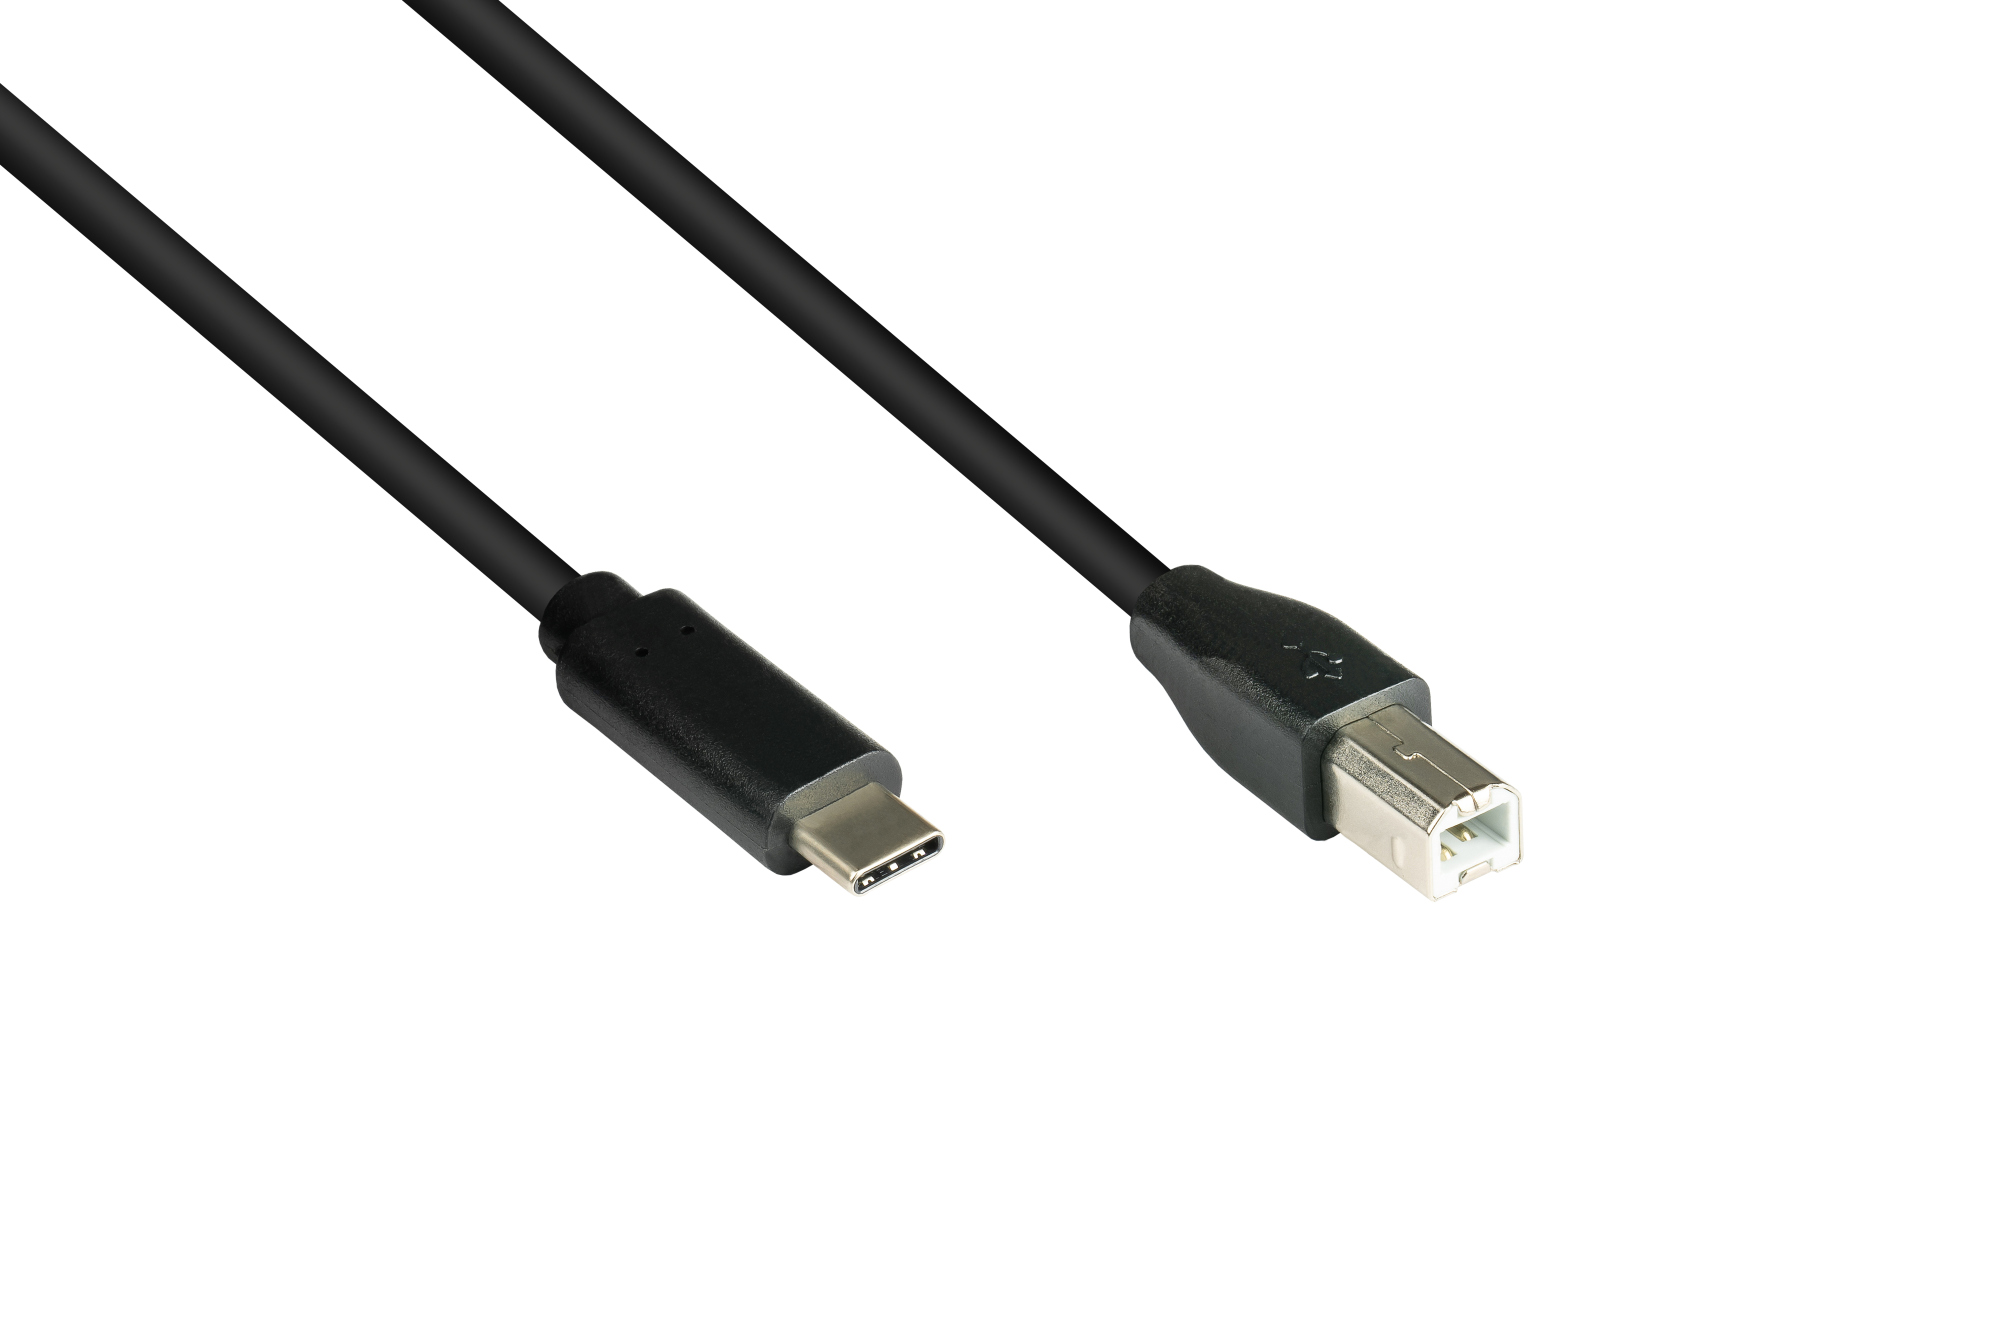 Anschlusskabel USB 2.0, USB-C™ Stecker an USB 2.0 B Stecker, CU, schwarz, 1,8m